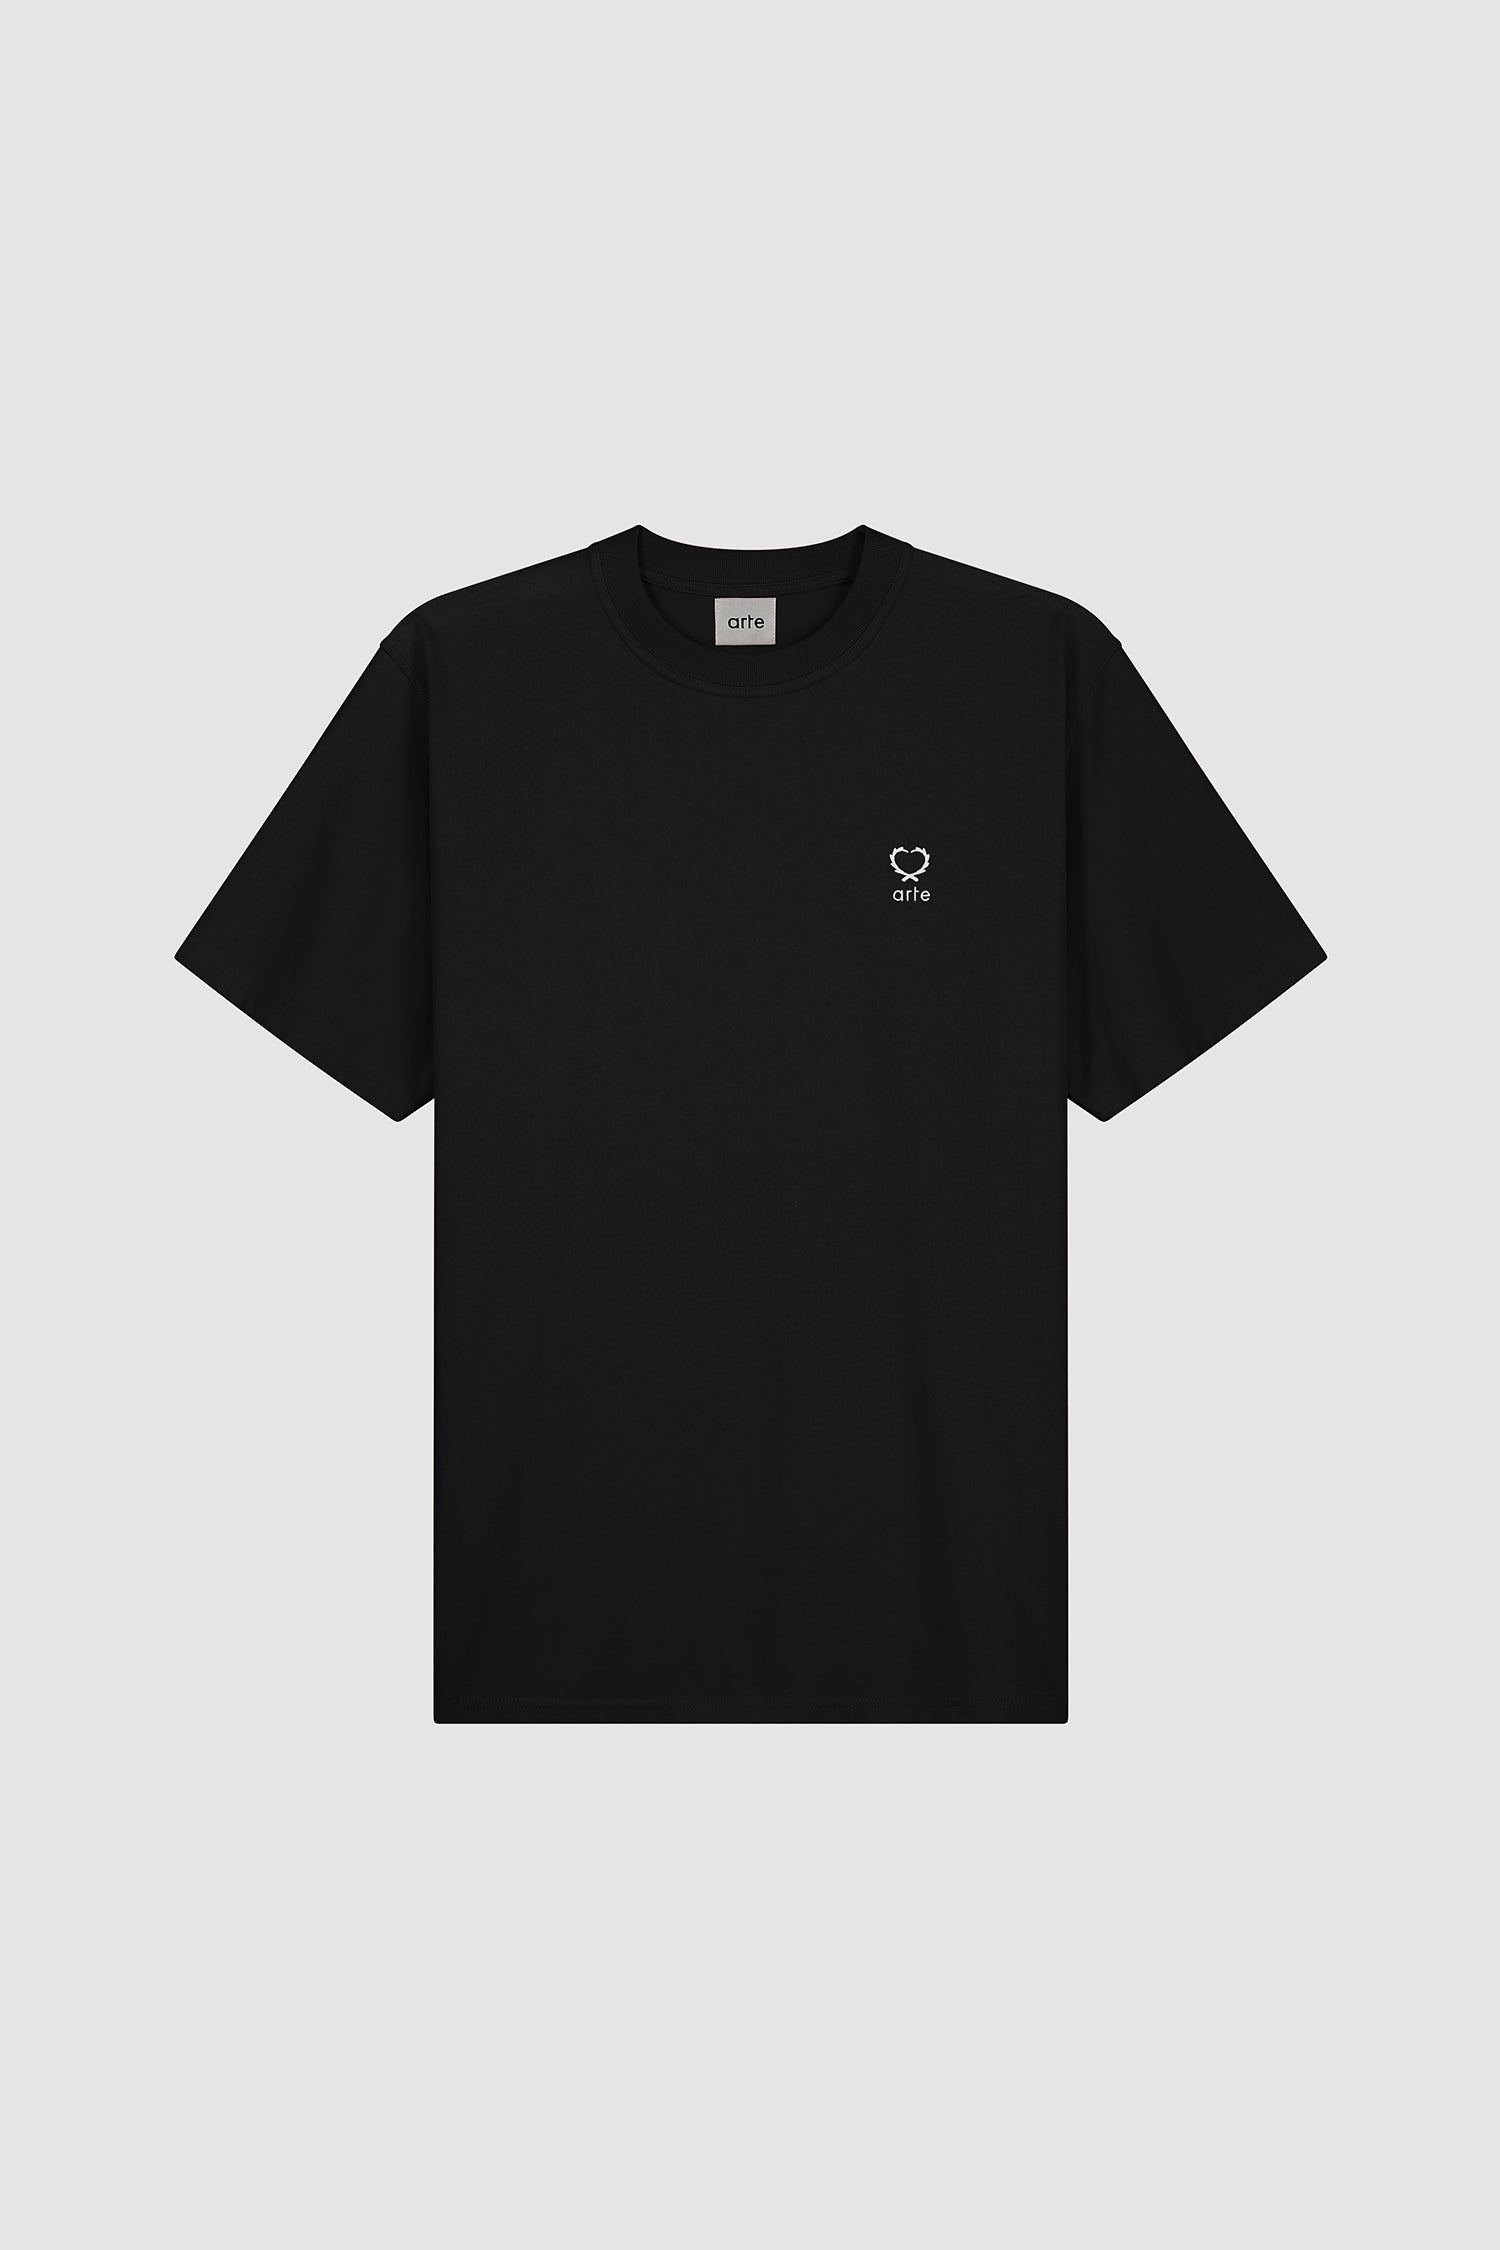 Teo Small Heart T-shirt - Black